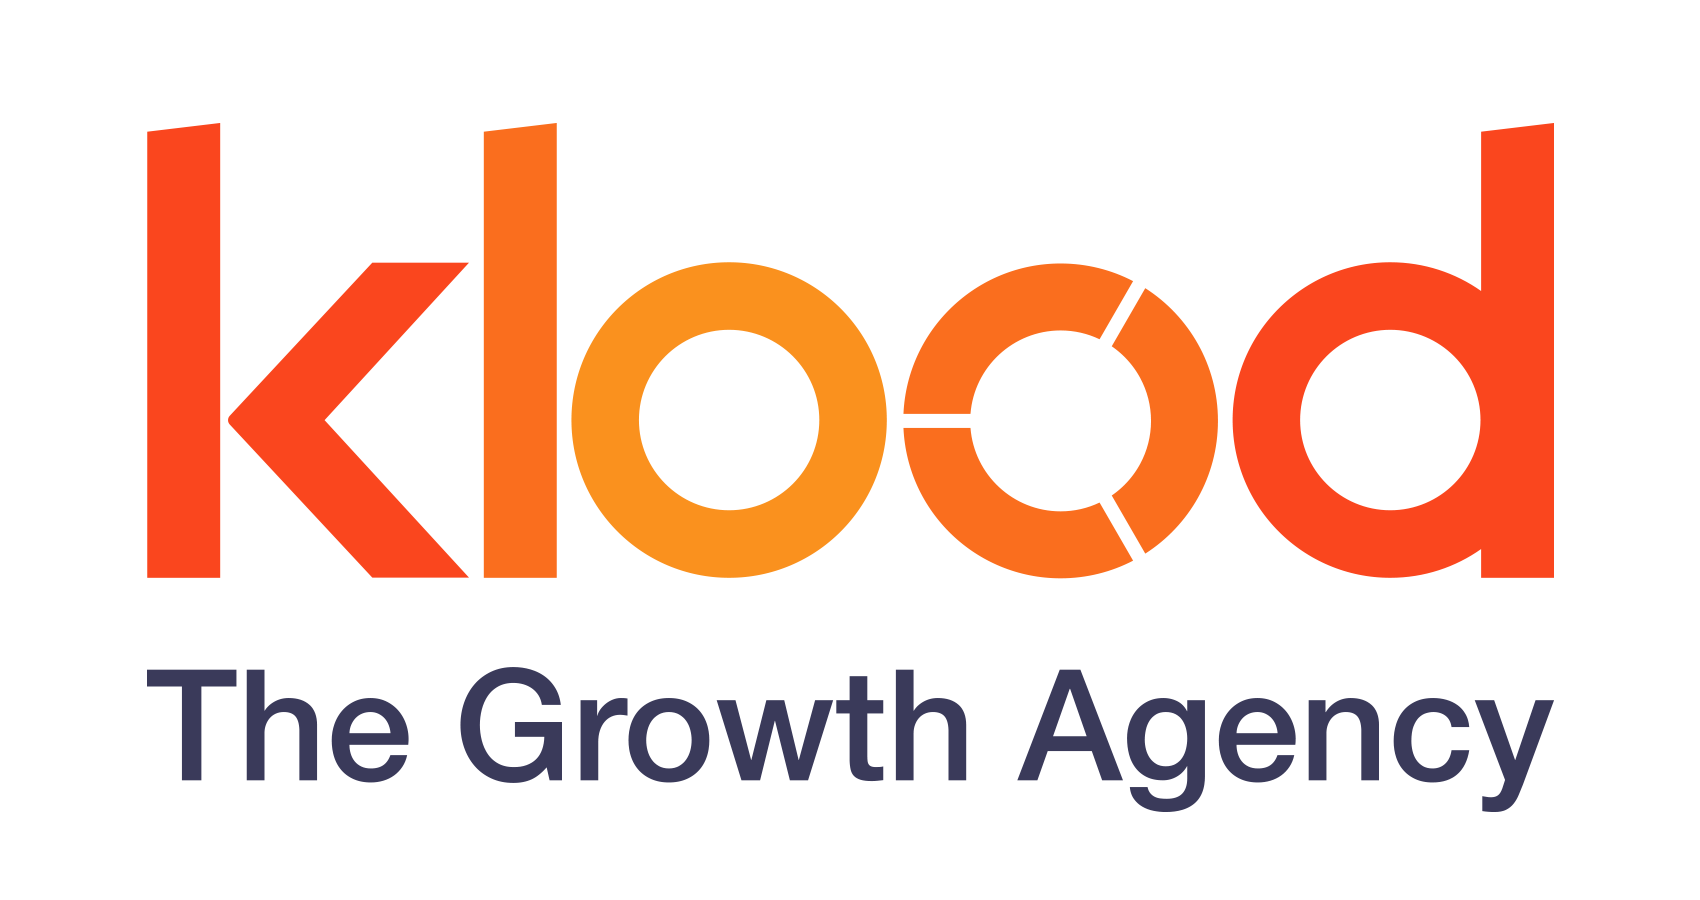 Klood logo